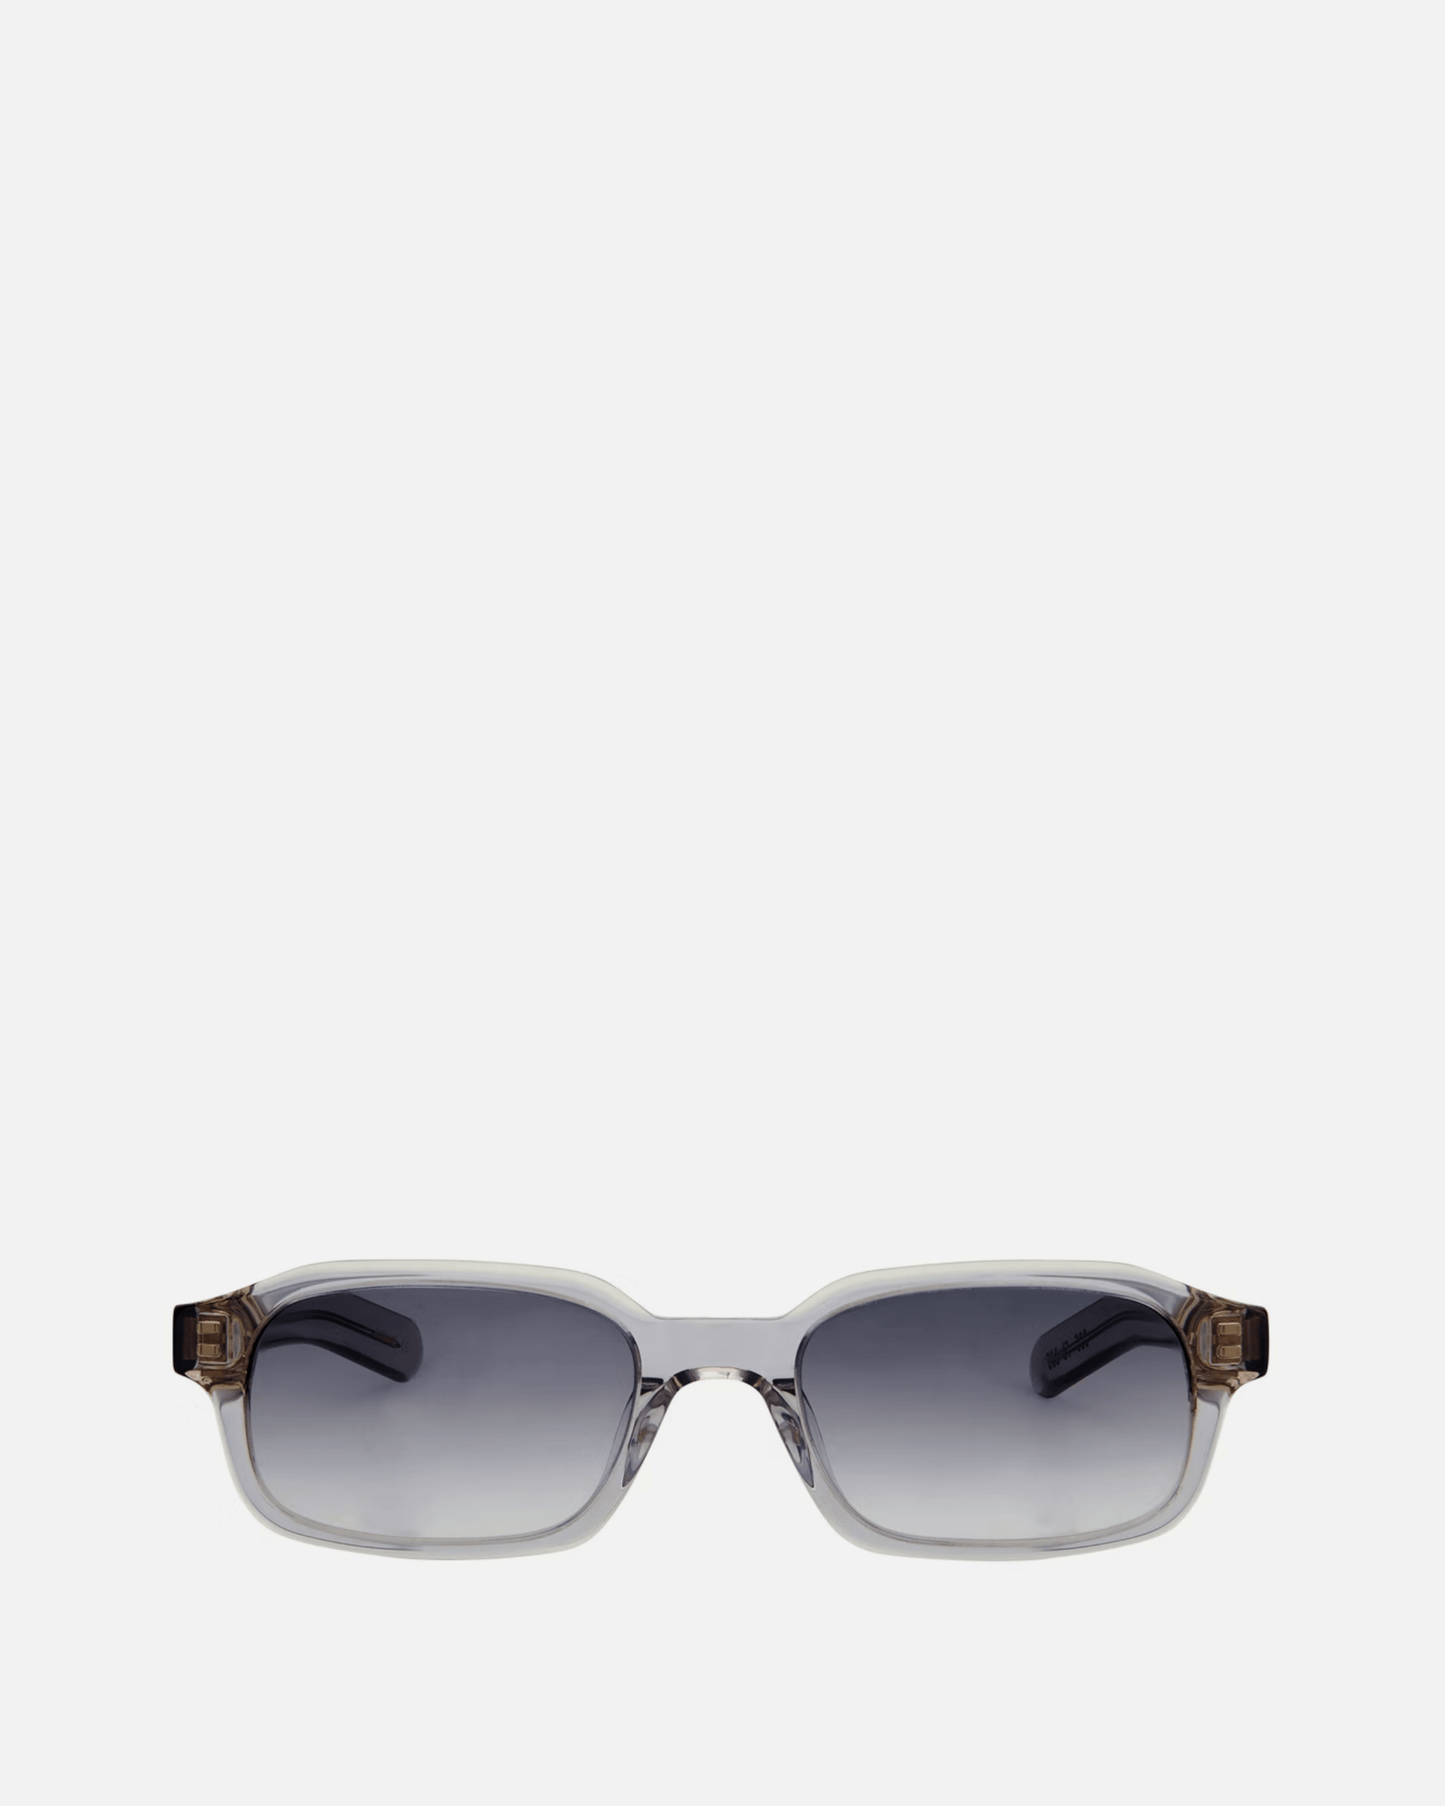 FLATLIST EYEWEAR Eyewear Hanky in Crystal Grey/Smoke Gradient